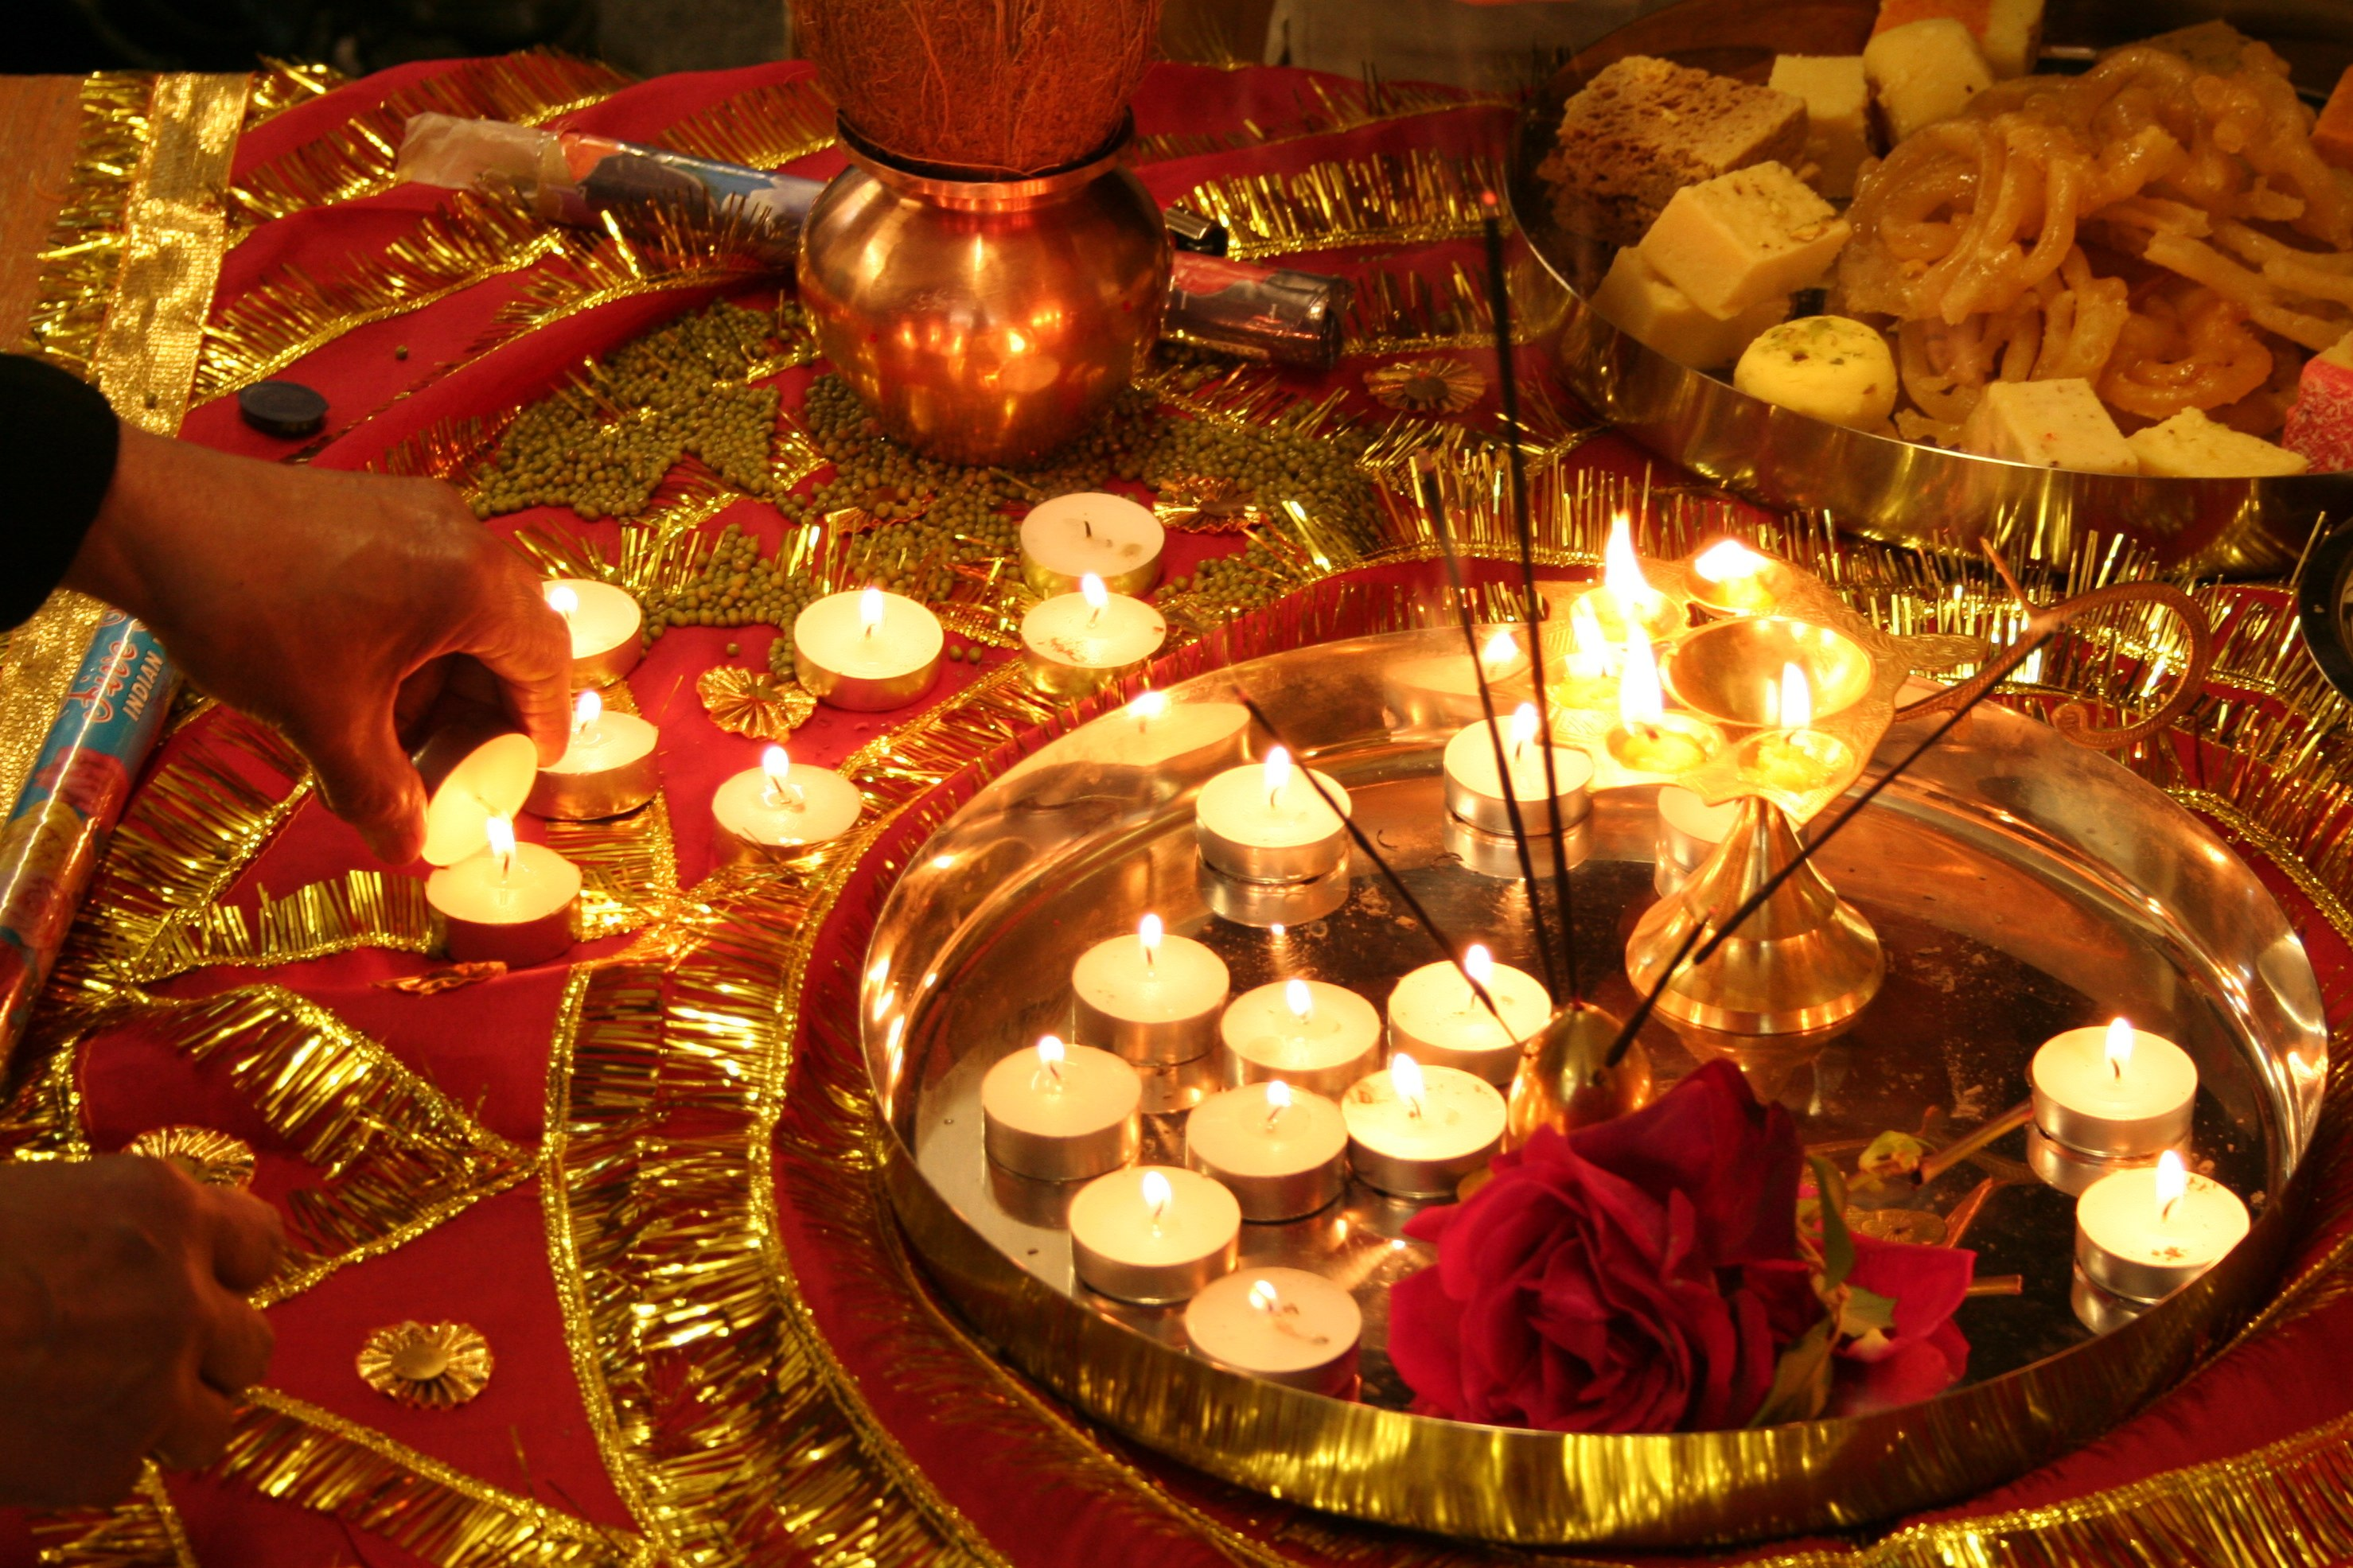 Turmeric, Turmeric astrology, Diwali, Turmeric remedies, Properties of turmeric, Turmeric benefits, Turmeric religion values, Health news, Festival of lights, Lifestyle news, Offbeat news